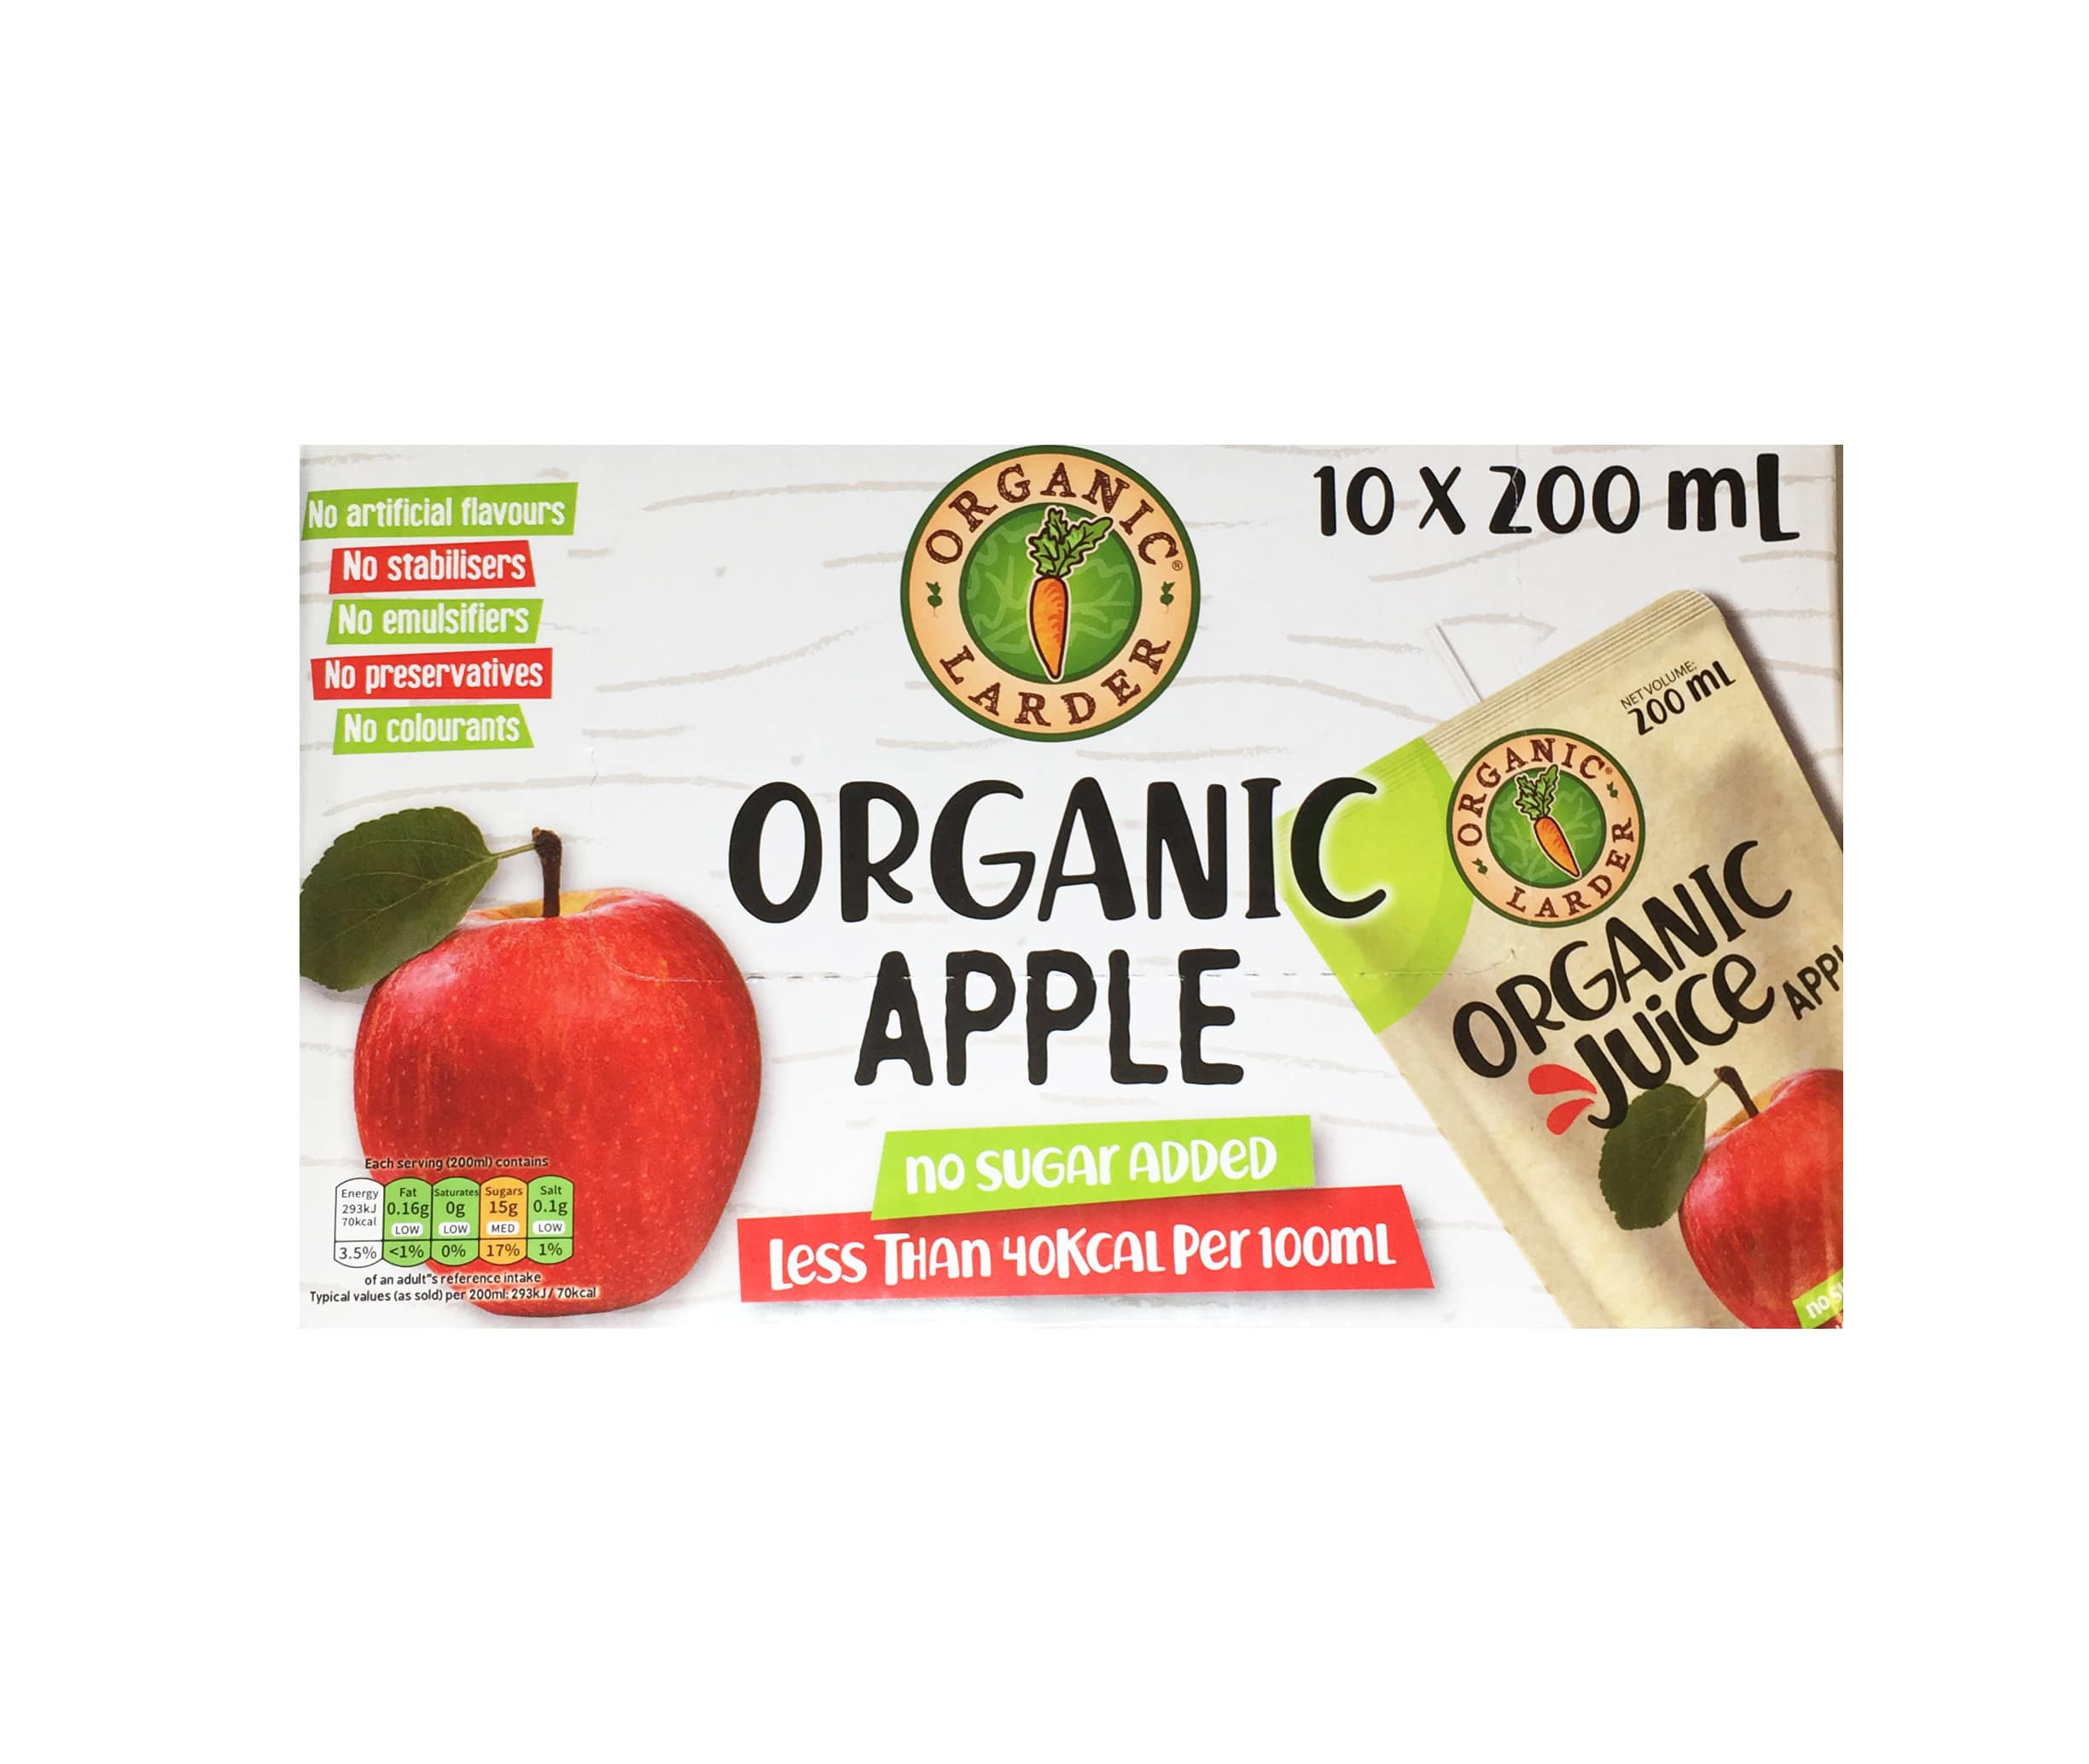 ORGANIC LARDER 75% Apple Juice, 10 x 200ml - Organic, Natural, No Added Sugar